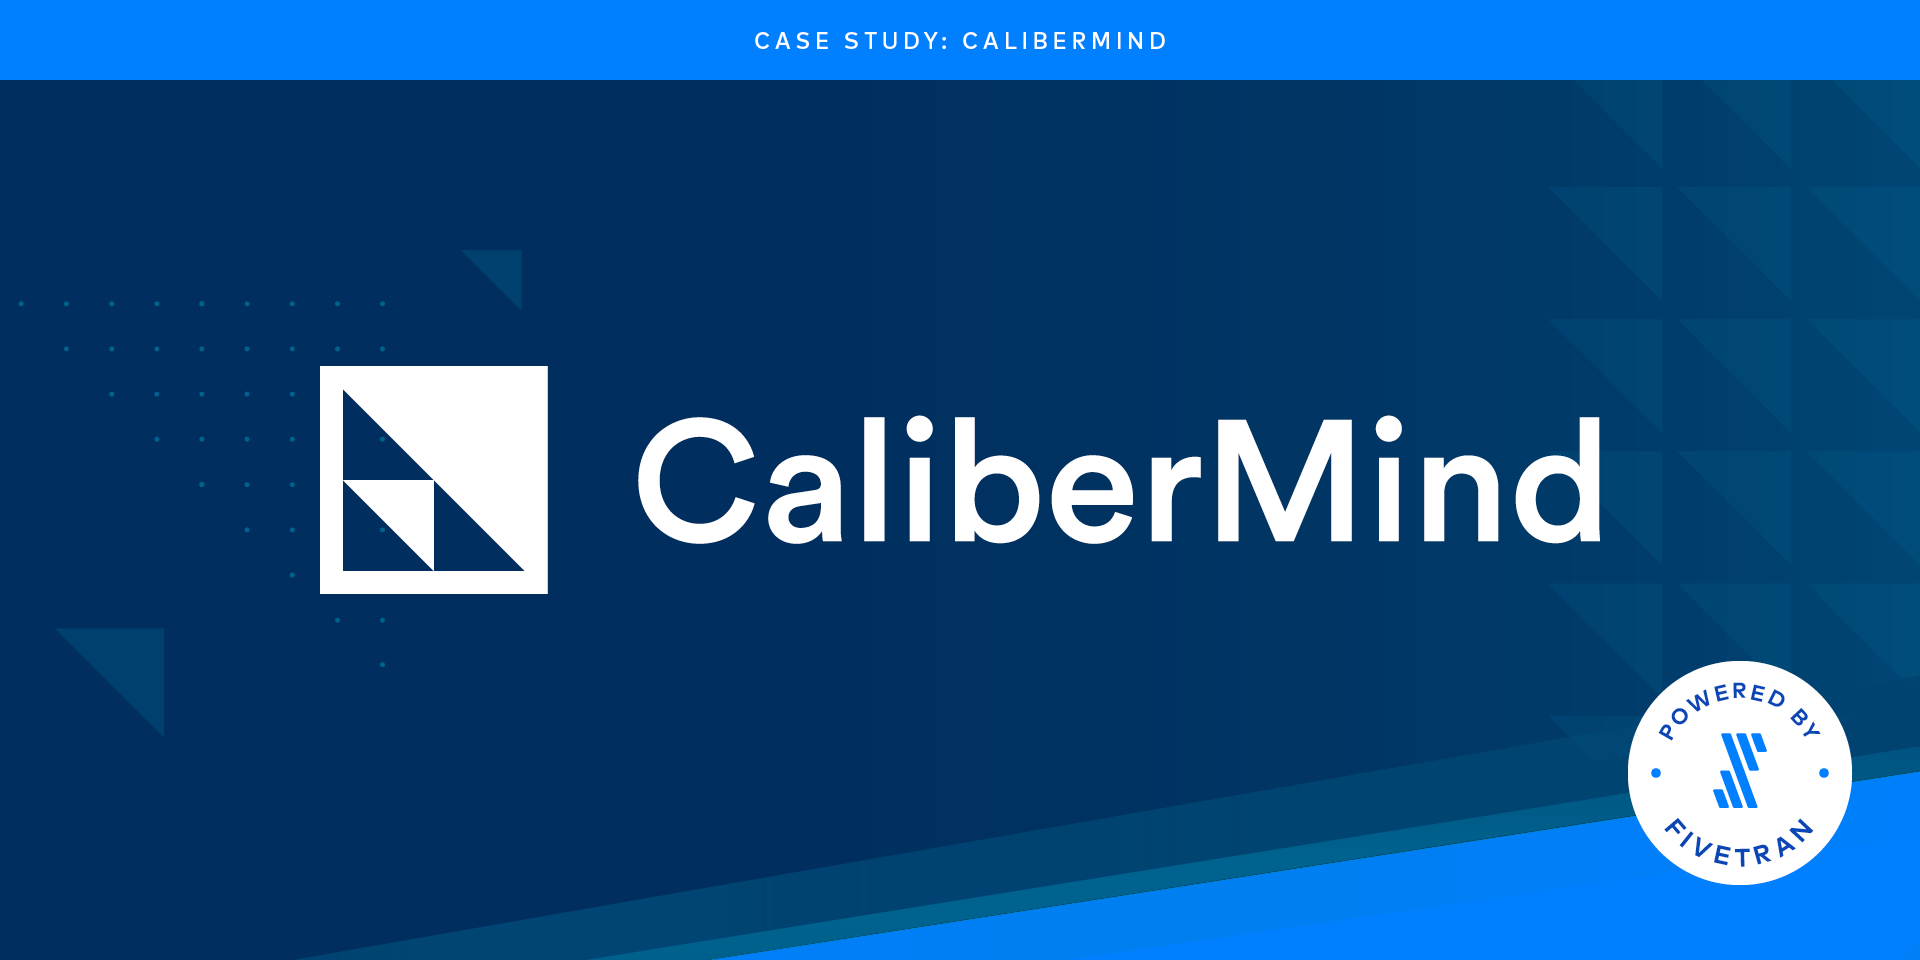 CaliberMind Onboards Customer Data With Fivetran